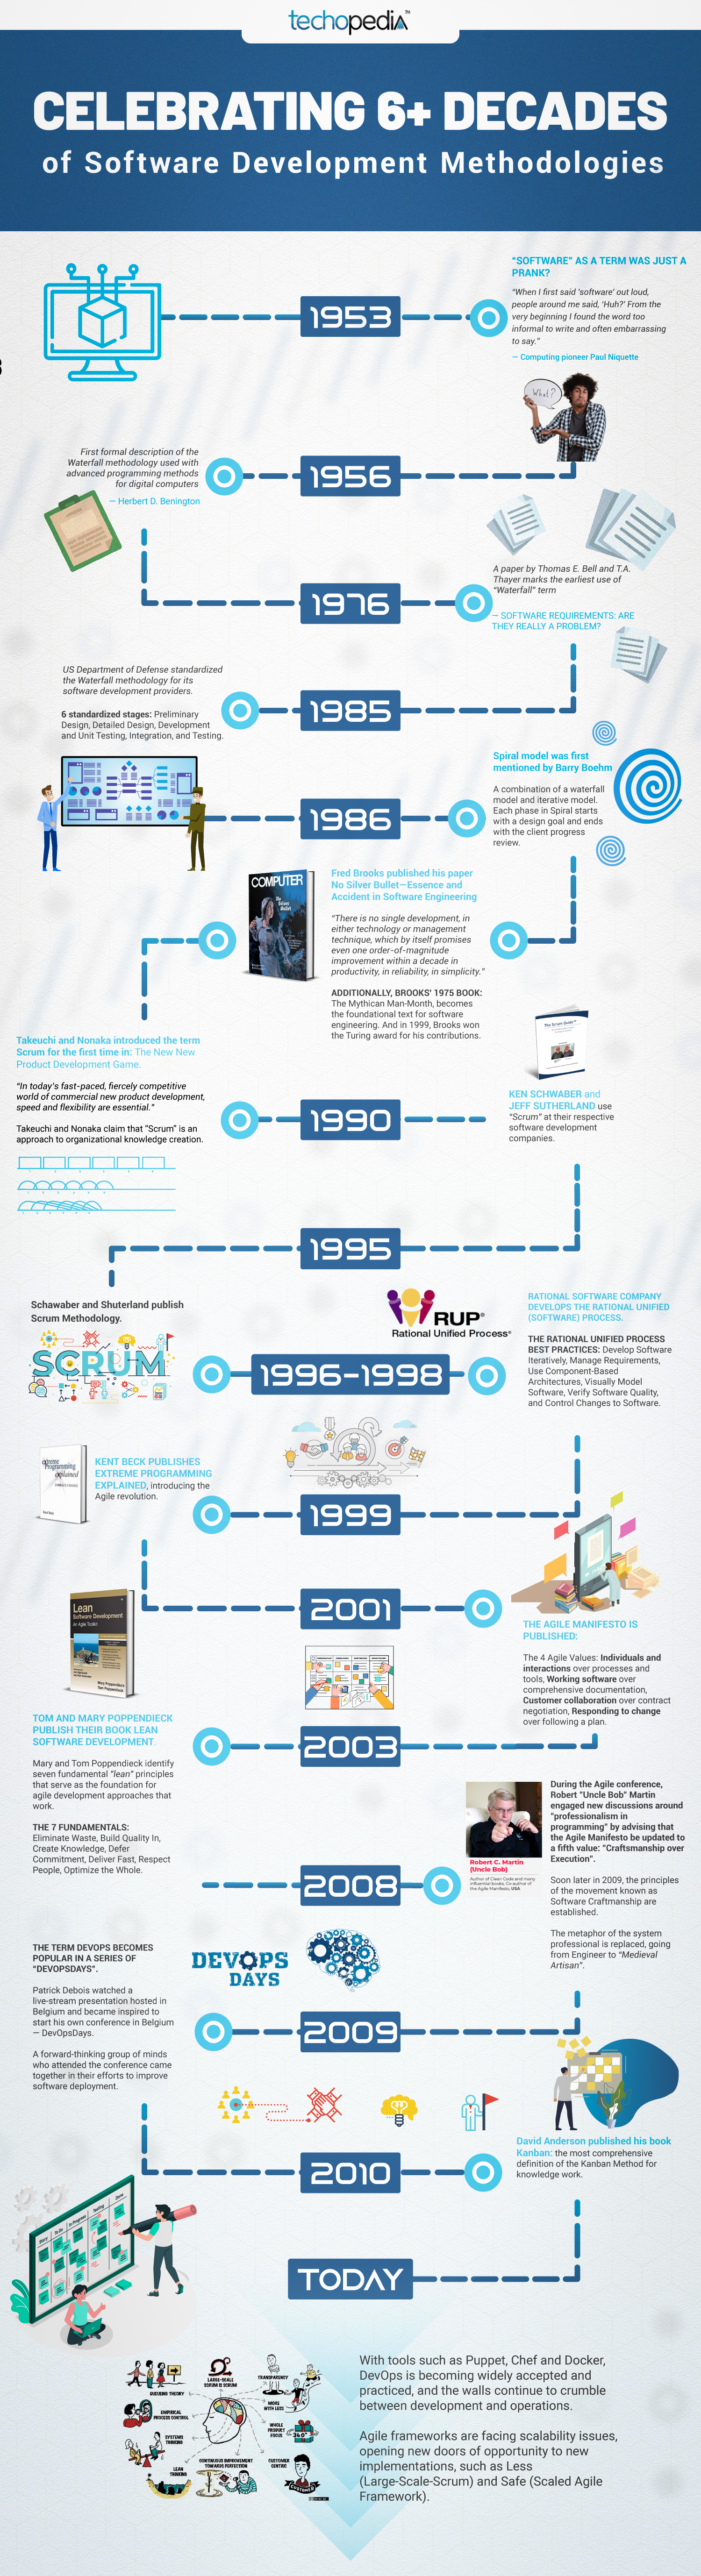 infographic celebrating 6+ decades of software development methodologies